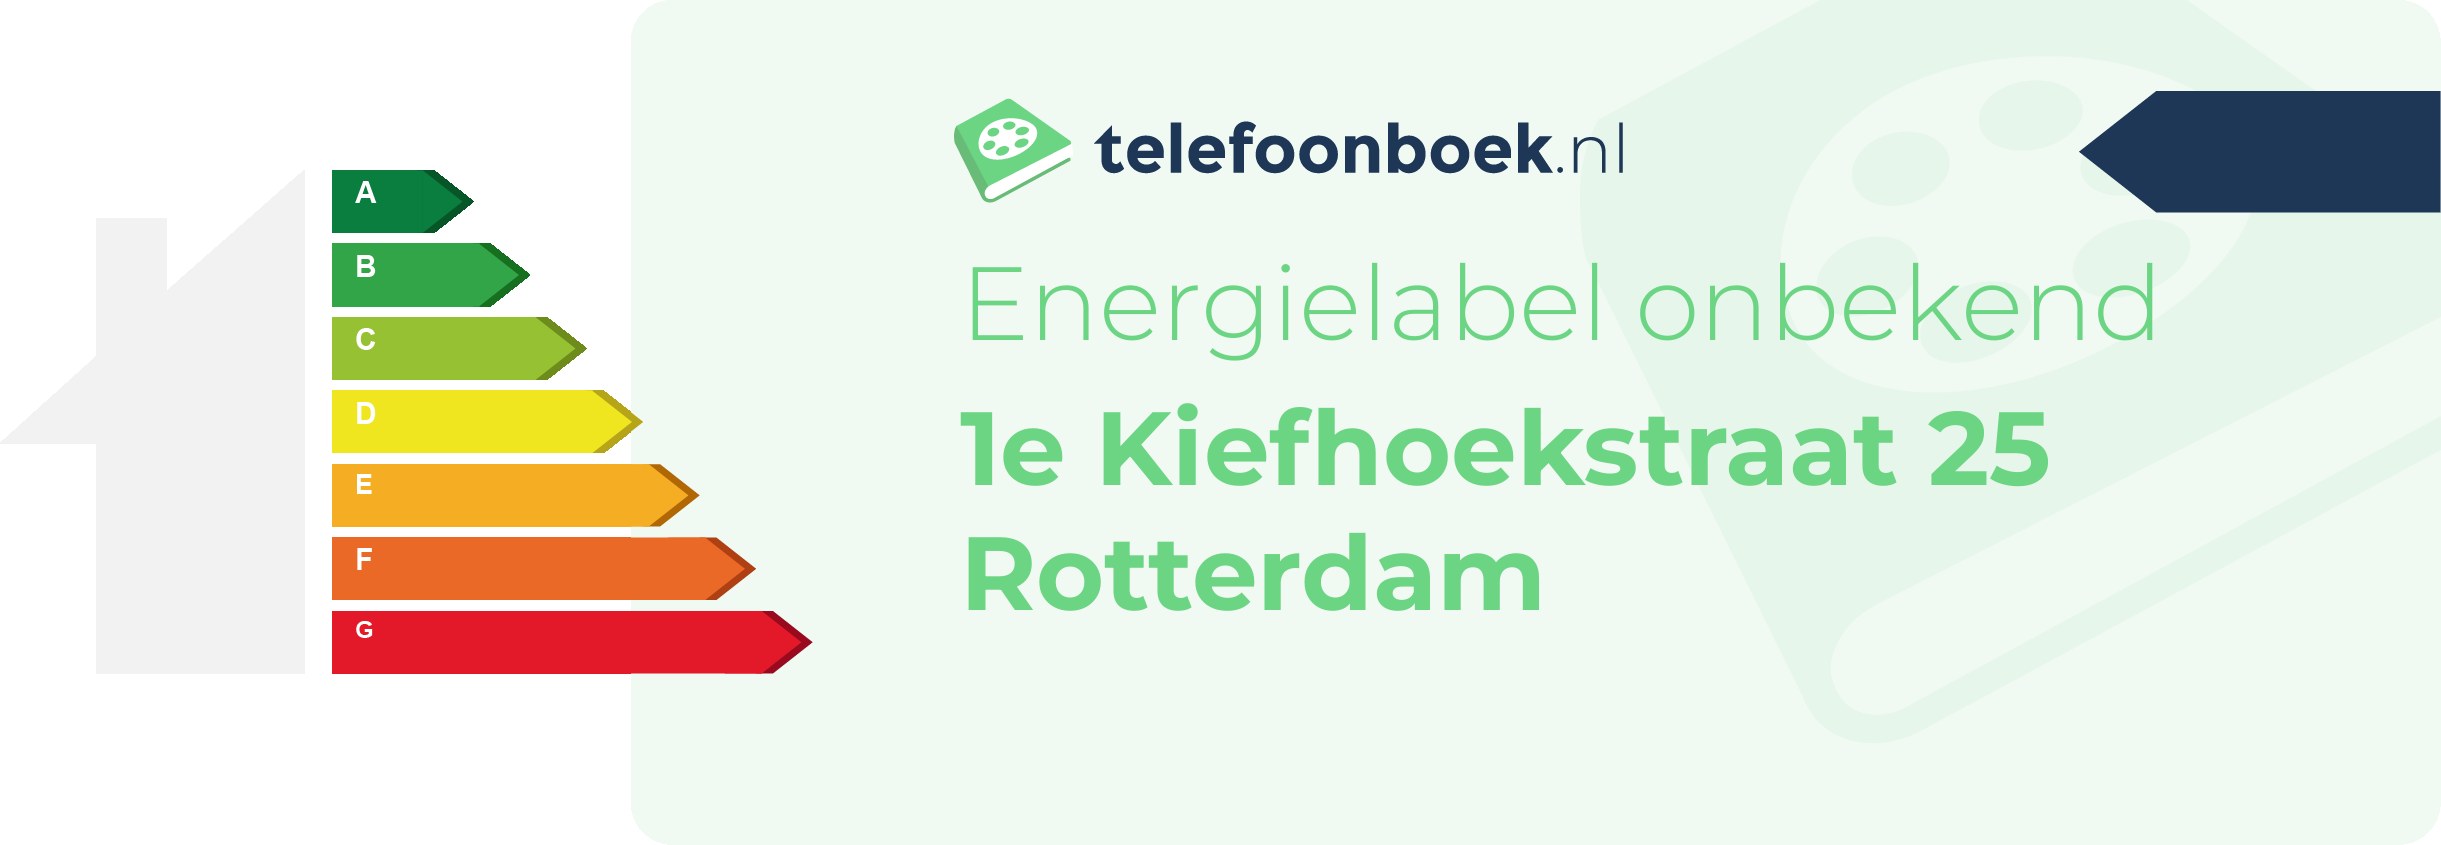 Energielabel 1e Kiefhoekstraat 25 Rotterdam